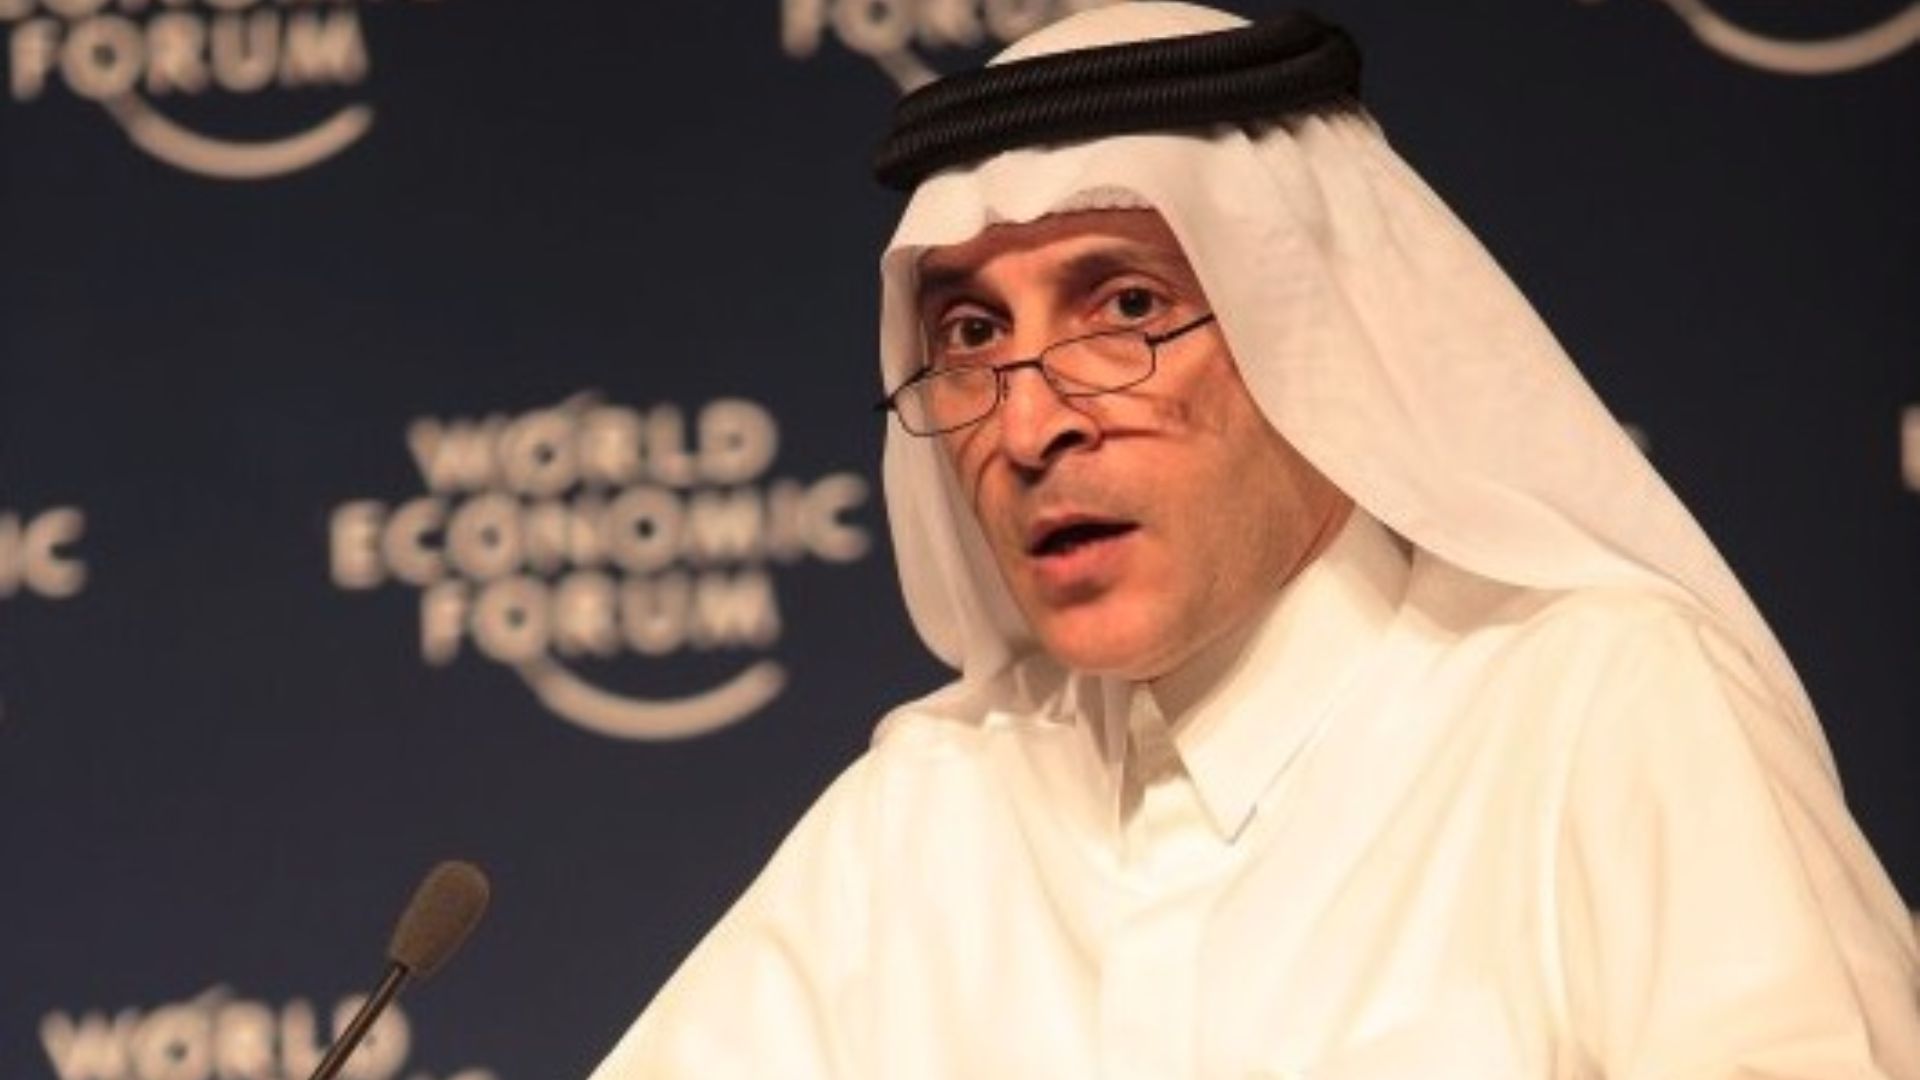 Kekayaan Akbar Al Baker, CEO Yang Mensukseskan Qatar Airways